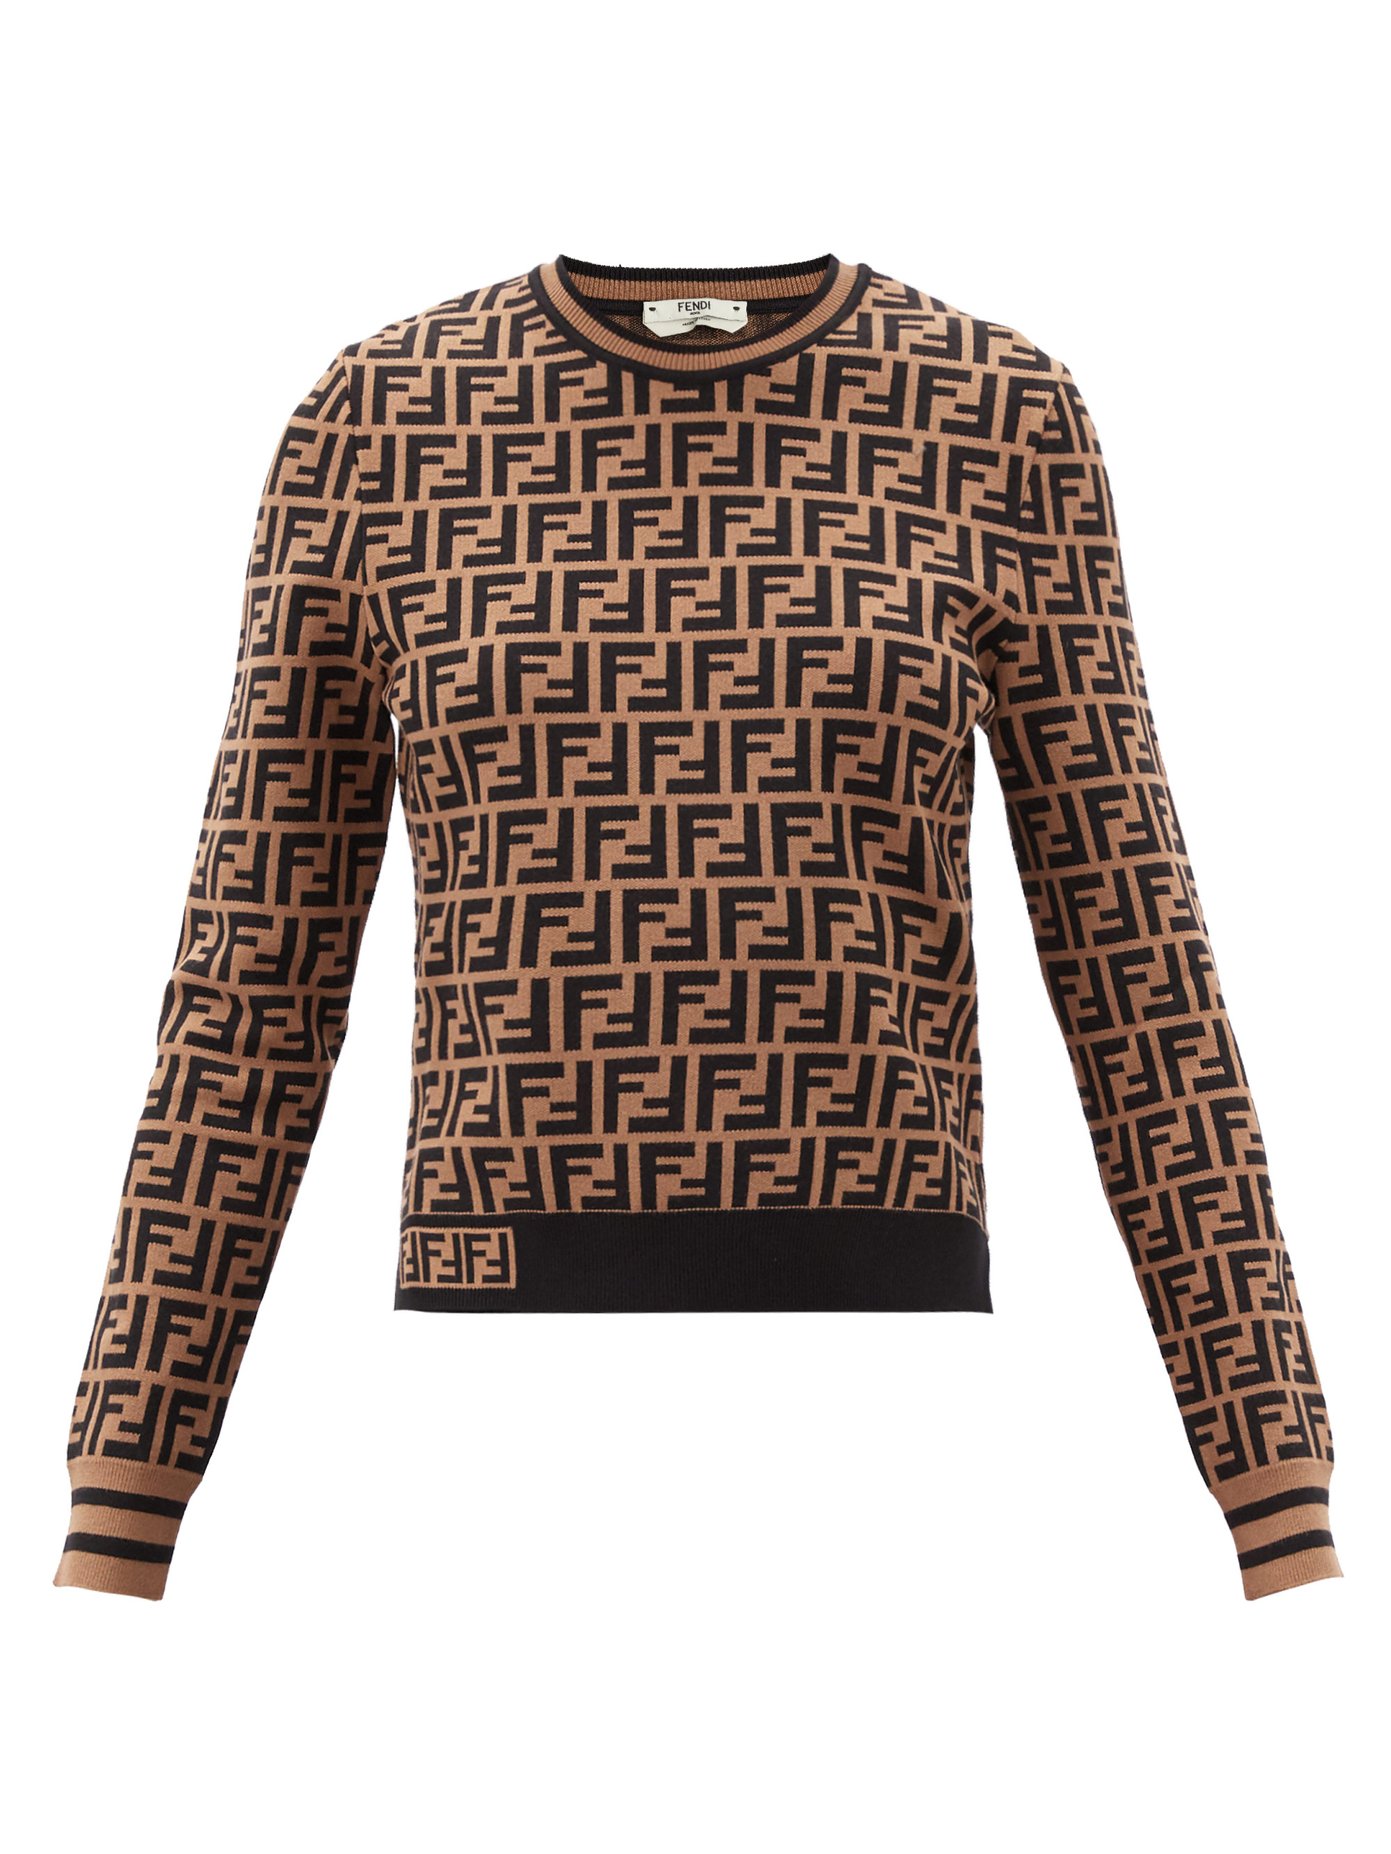 FF-jacquard sweater | Fendi 